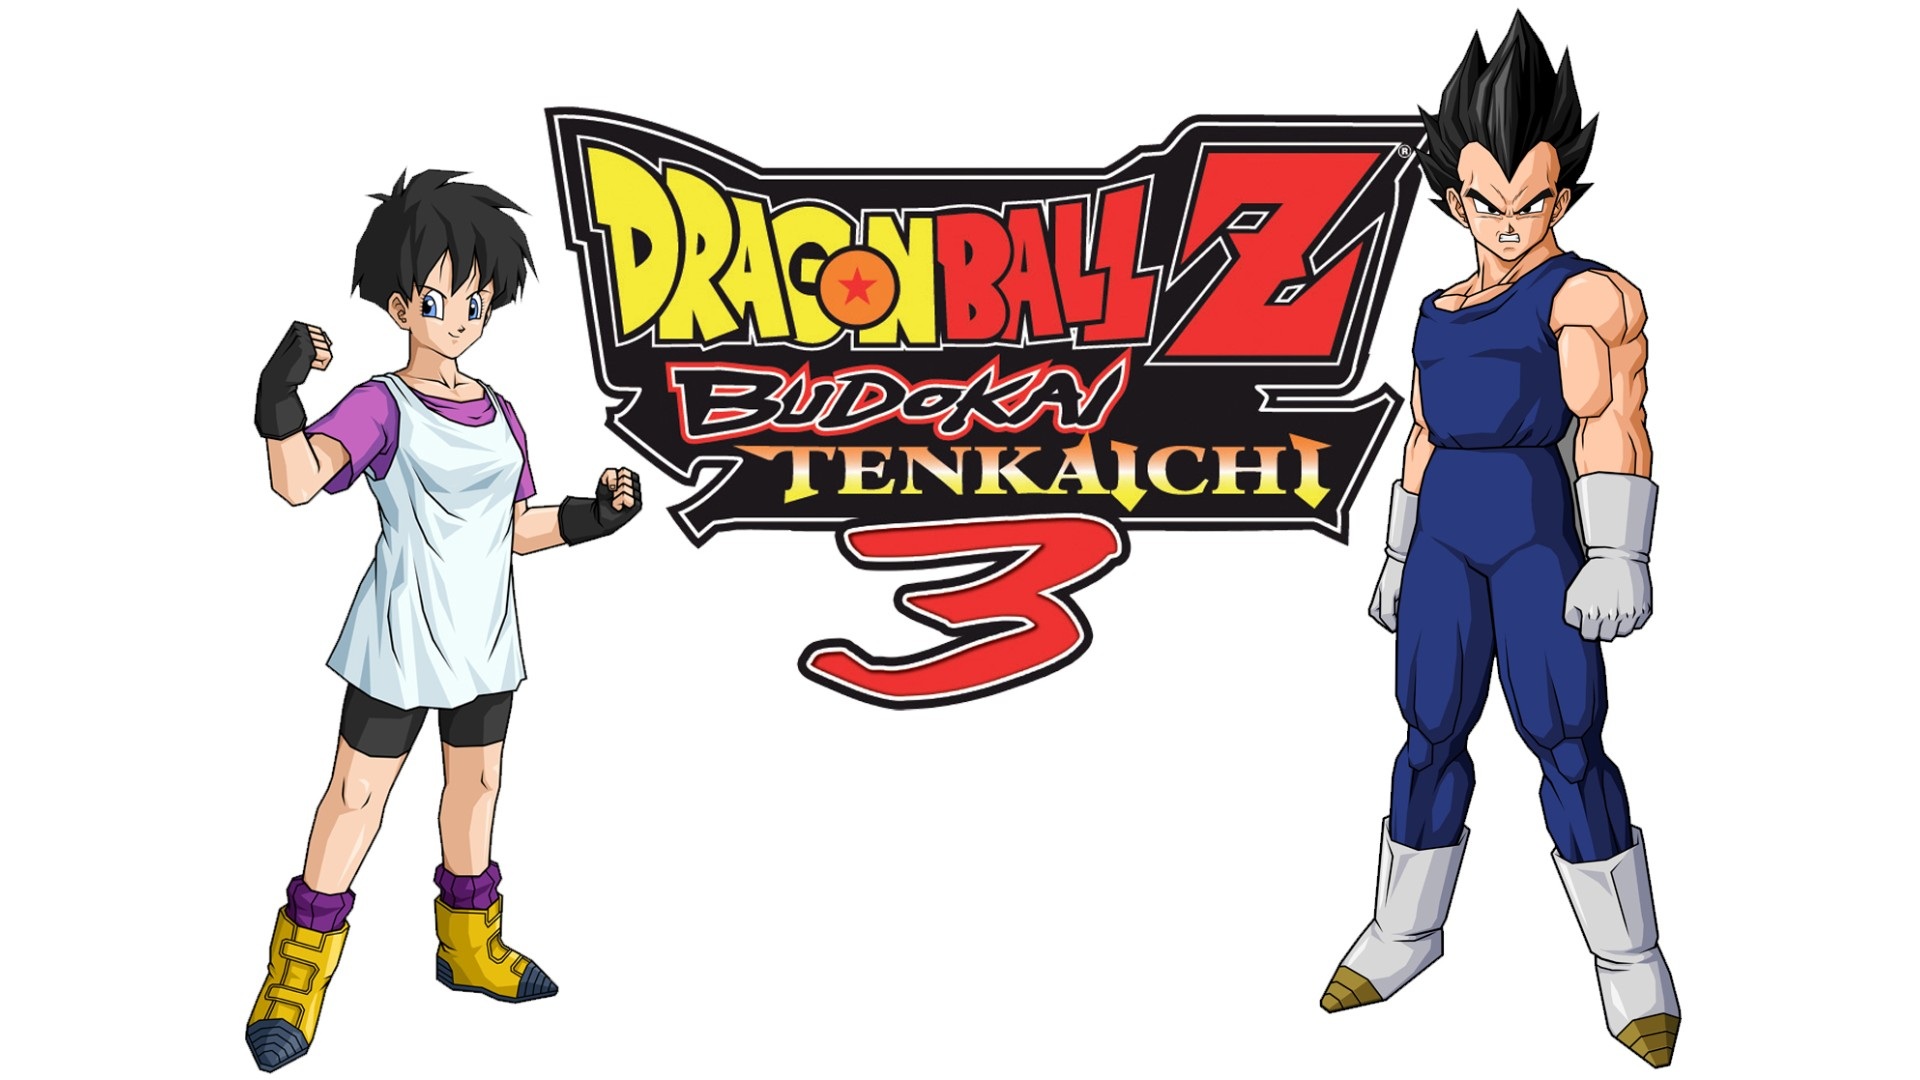 Dragon Ball Z: Budokai Tenkaichi 3 Screenshots and Images - GamingExcellence